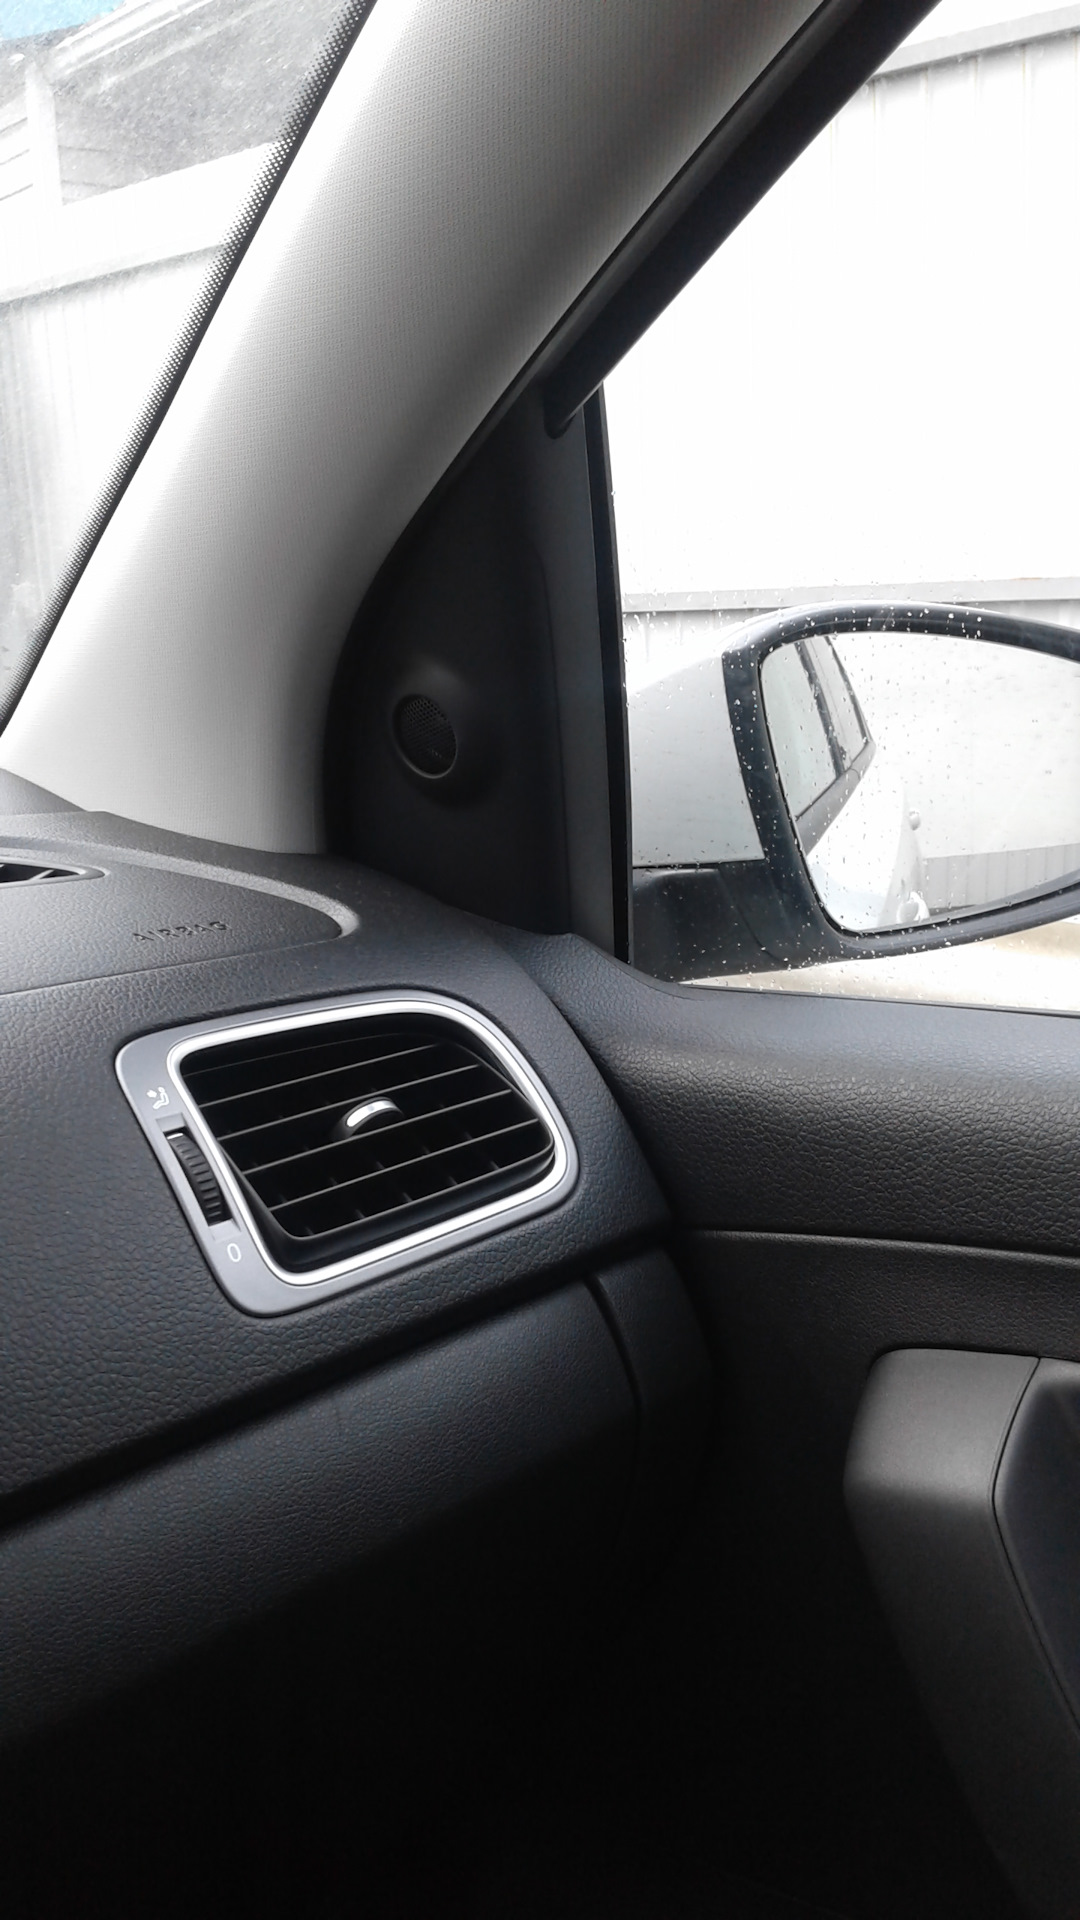 Volkswagen polo зеркала. Уголки зеркал Фольксваген поло 2013. Volkswagen Polo sedan салонное зеркало. Зеркало поло Фольксваген поло.